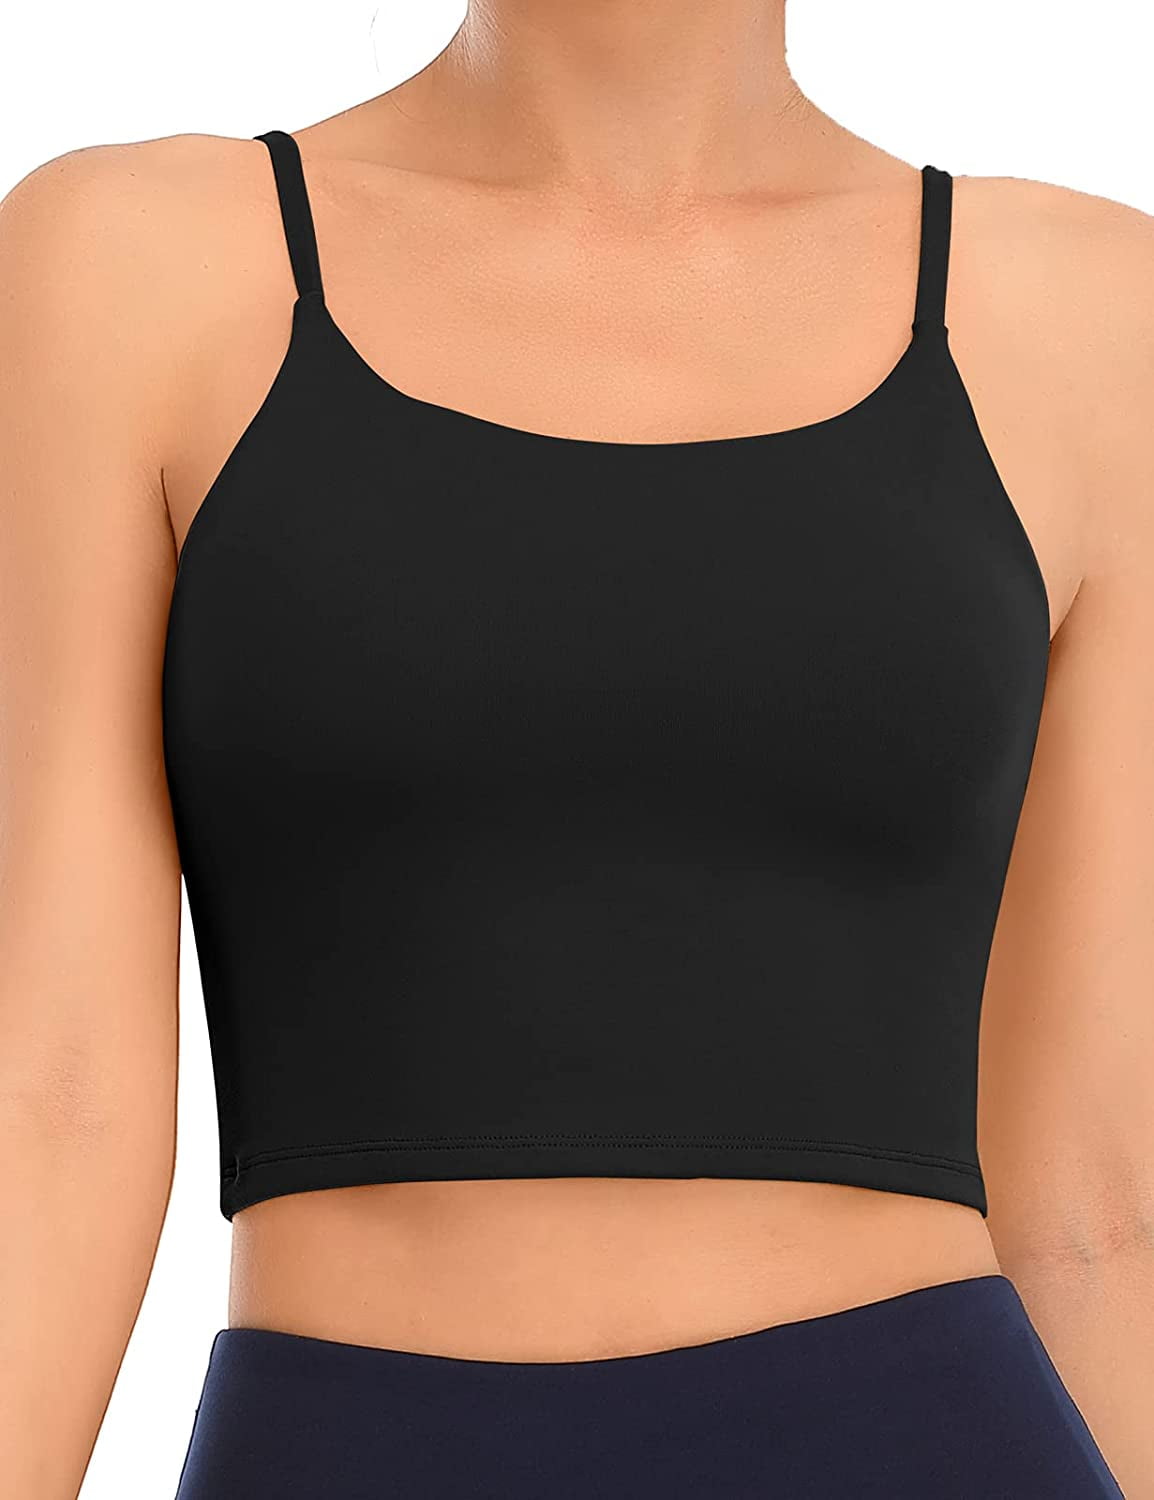 Women's Crop Tank Top with Bra Spaghetti Strap Athletic Yoga Sports Bras 